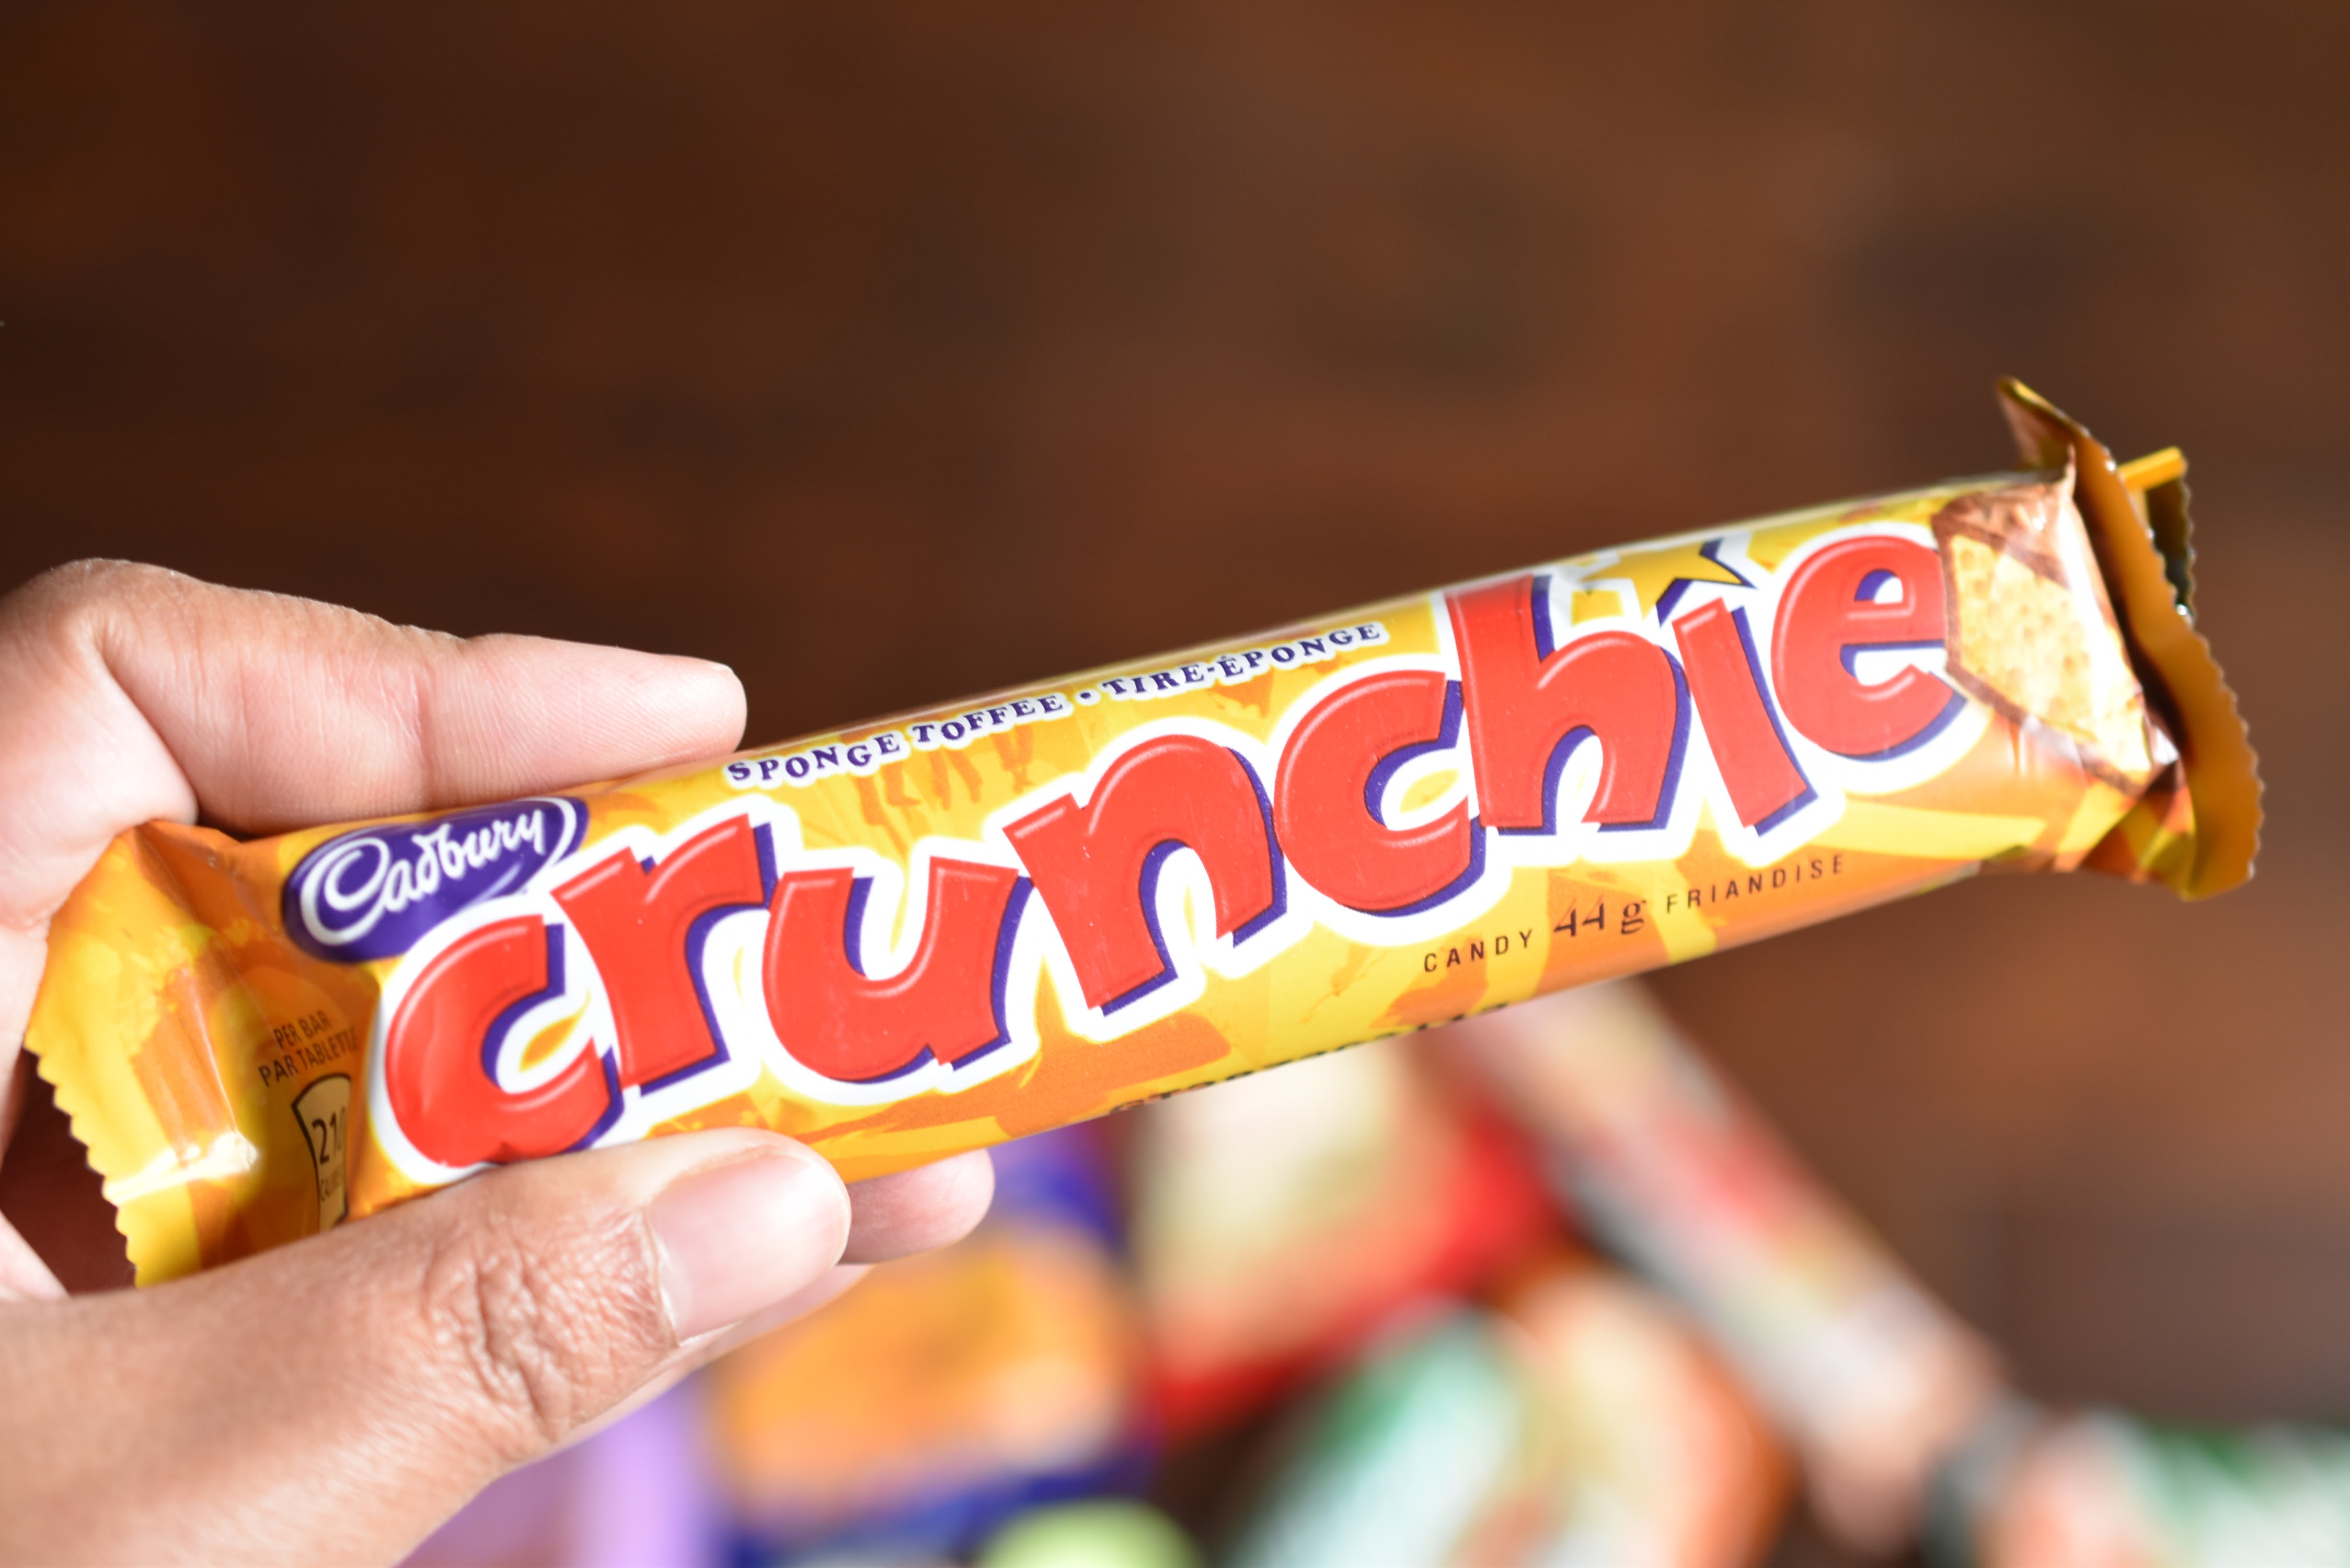 Candbury Crunchie from Canada